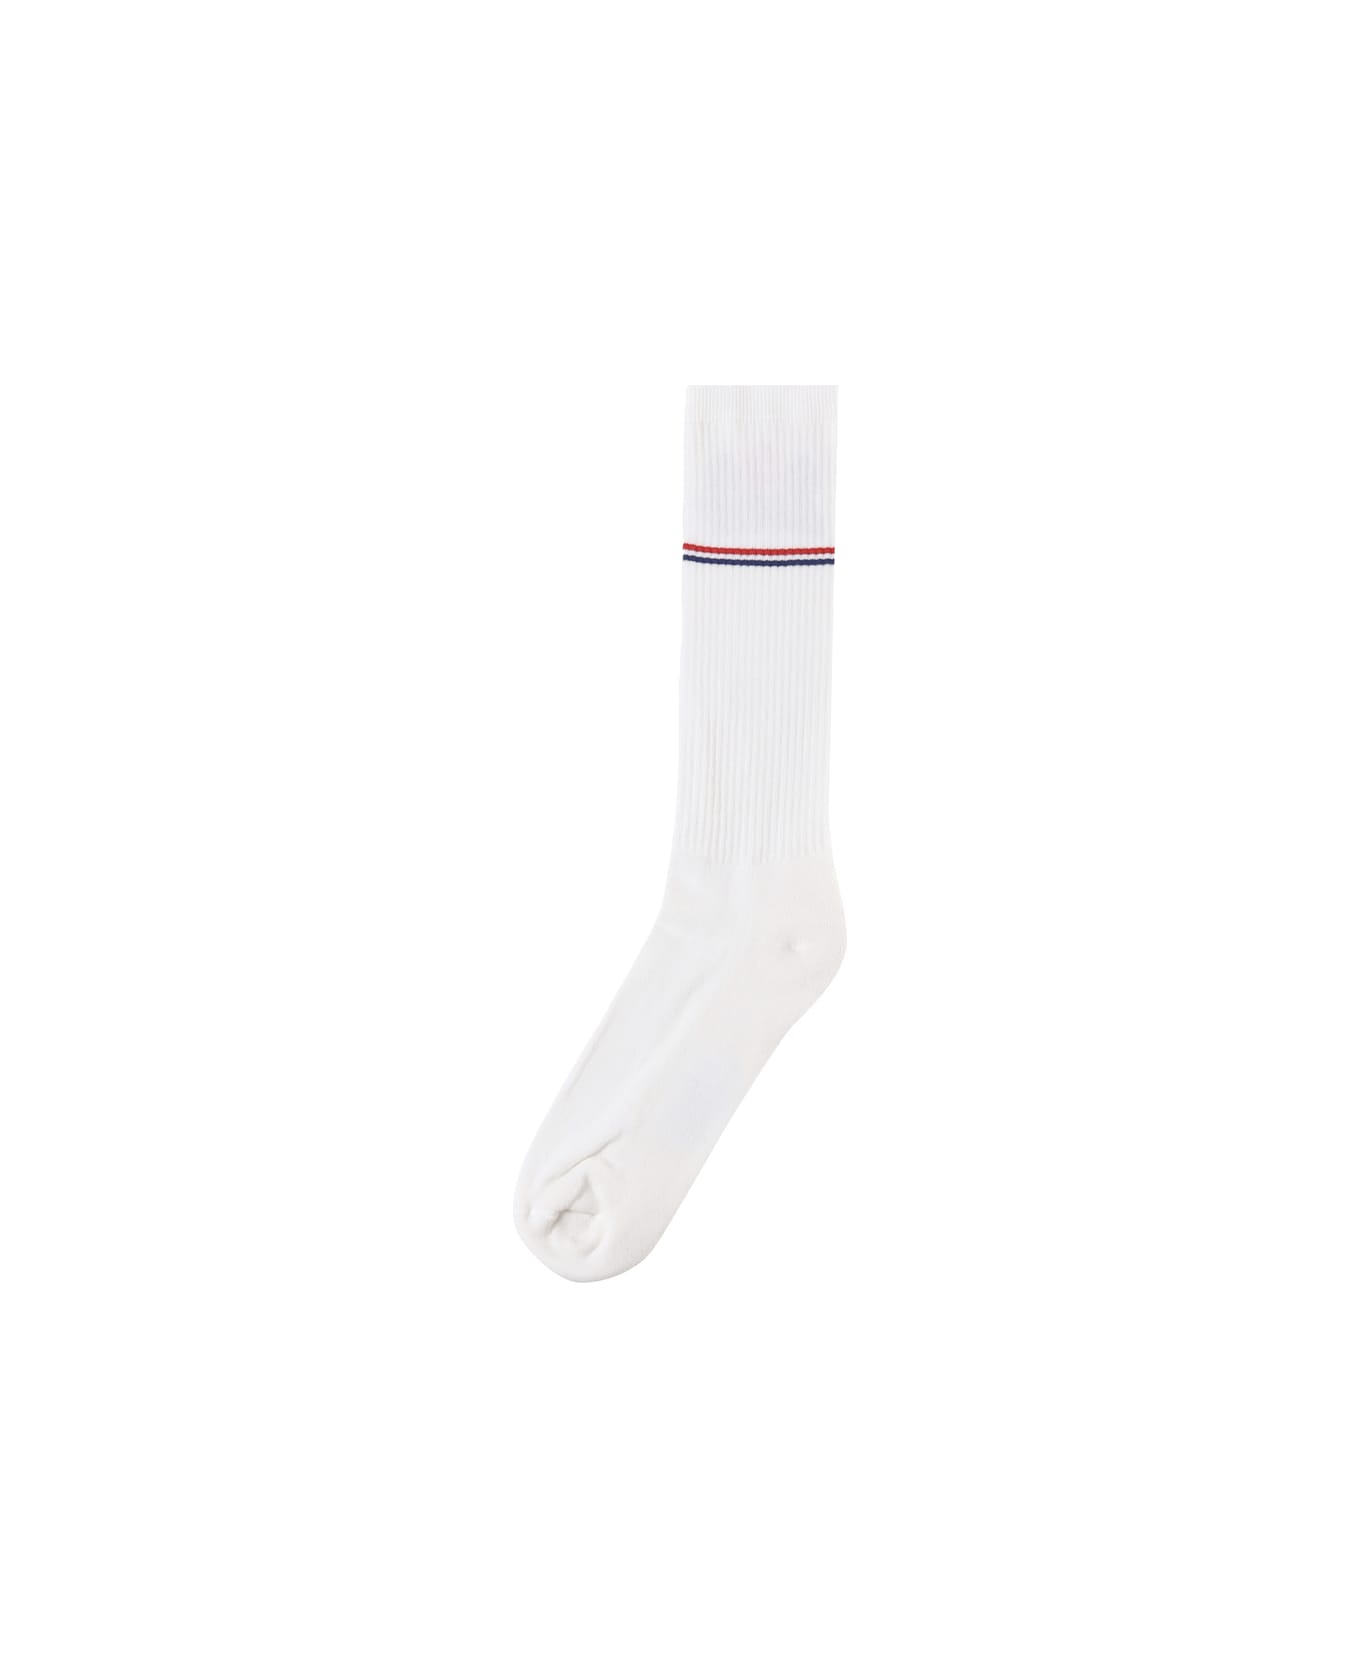 Autry Socks With Logo - bianco 靴下